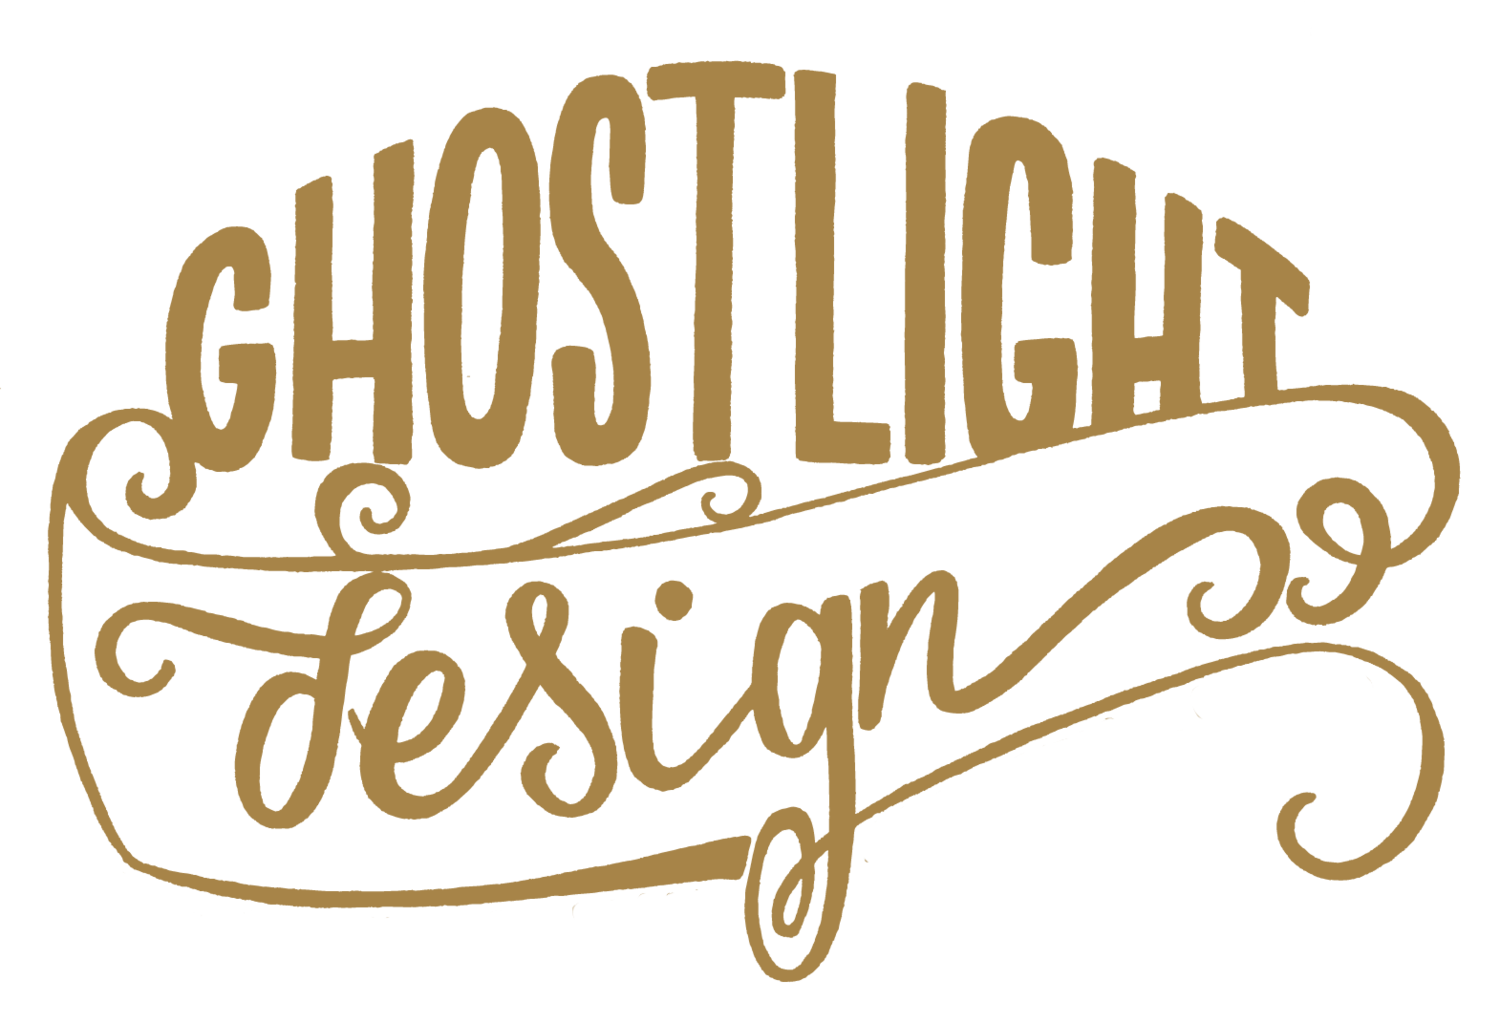 Ghostlight Design